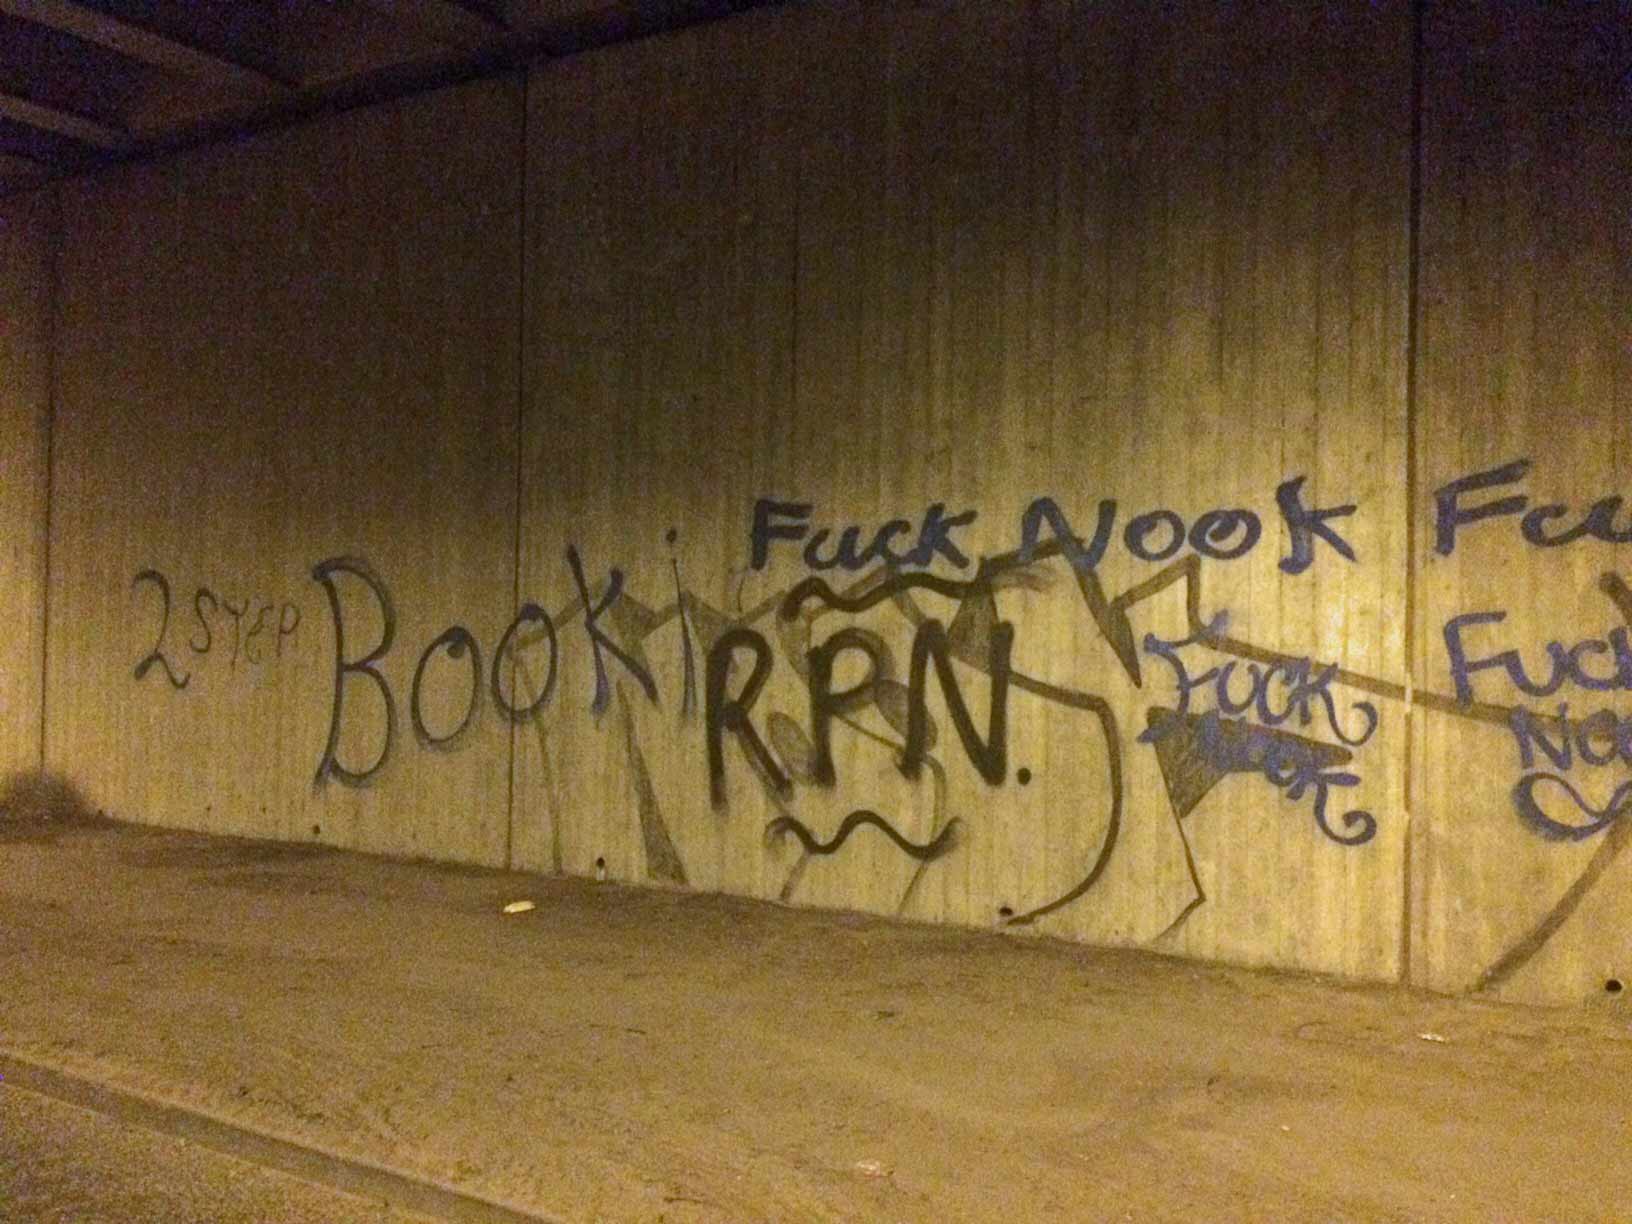 Police appeal to find Boroughbridge graffiti vandals